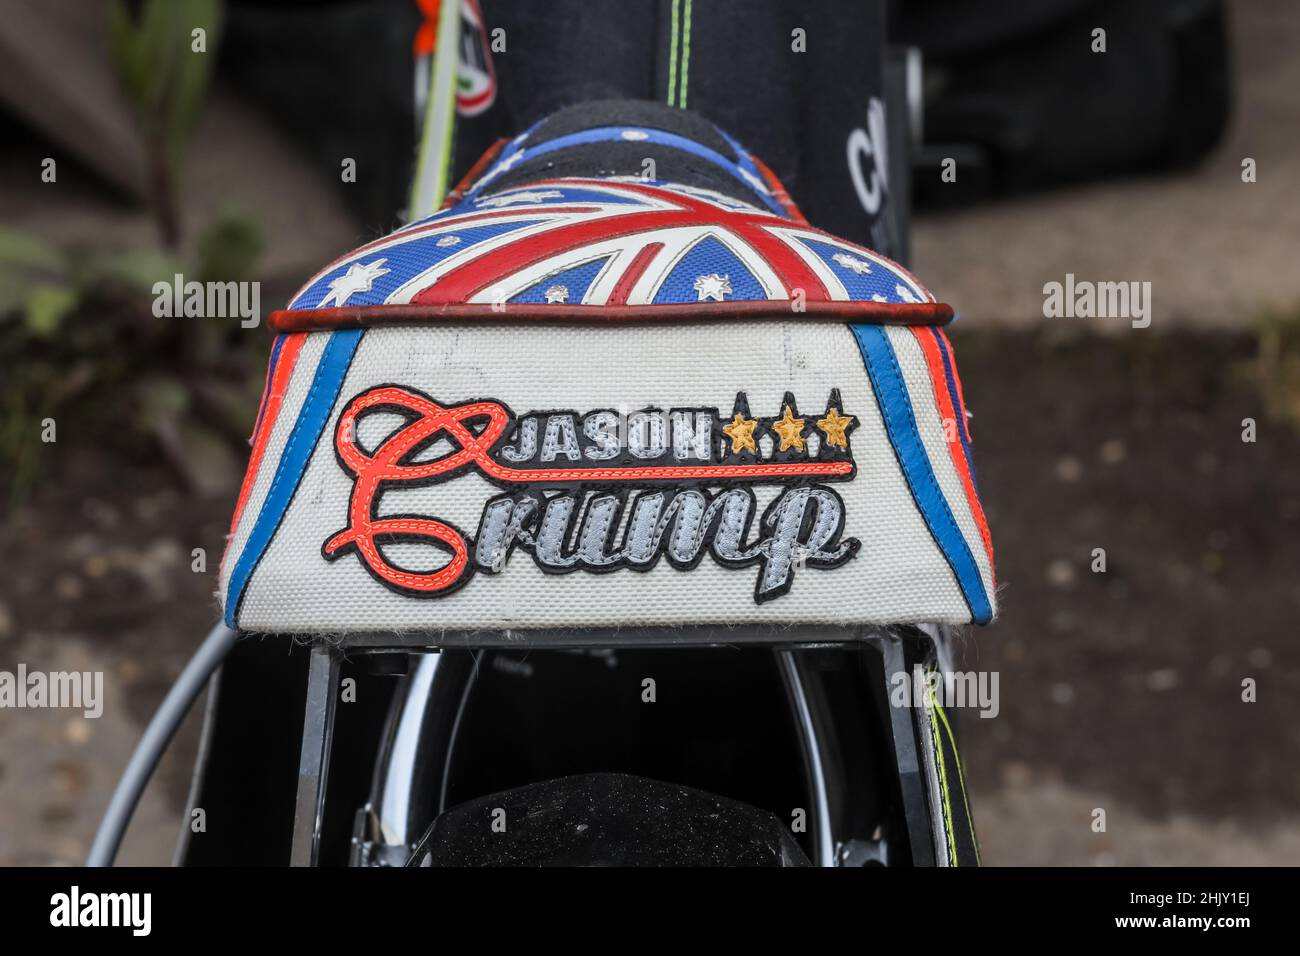 Sella per bici jason Crump's speedway con logo. Ipswich Witches Speedway, giornata stampa. 14 maggio 2021. Foto Stock